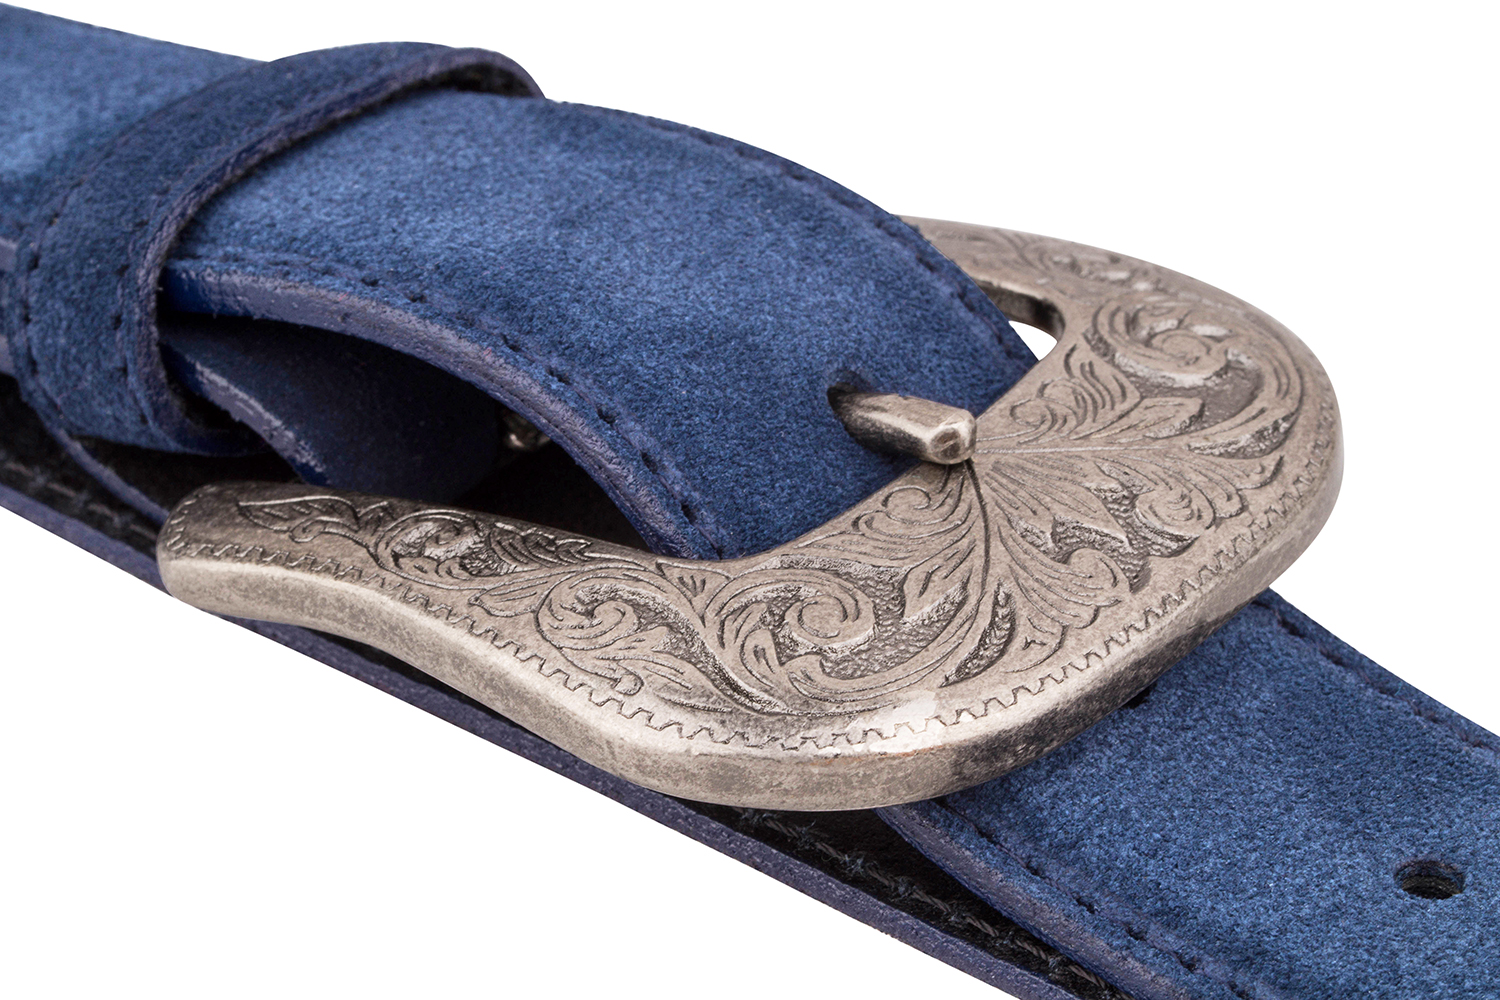 Mens Western Belts Antique silver belt buckles Cowboy Cowgirl Blue suede leather